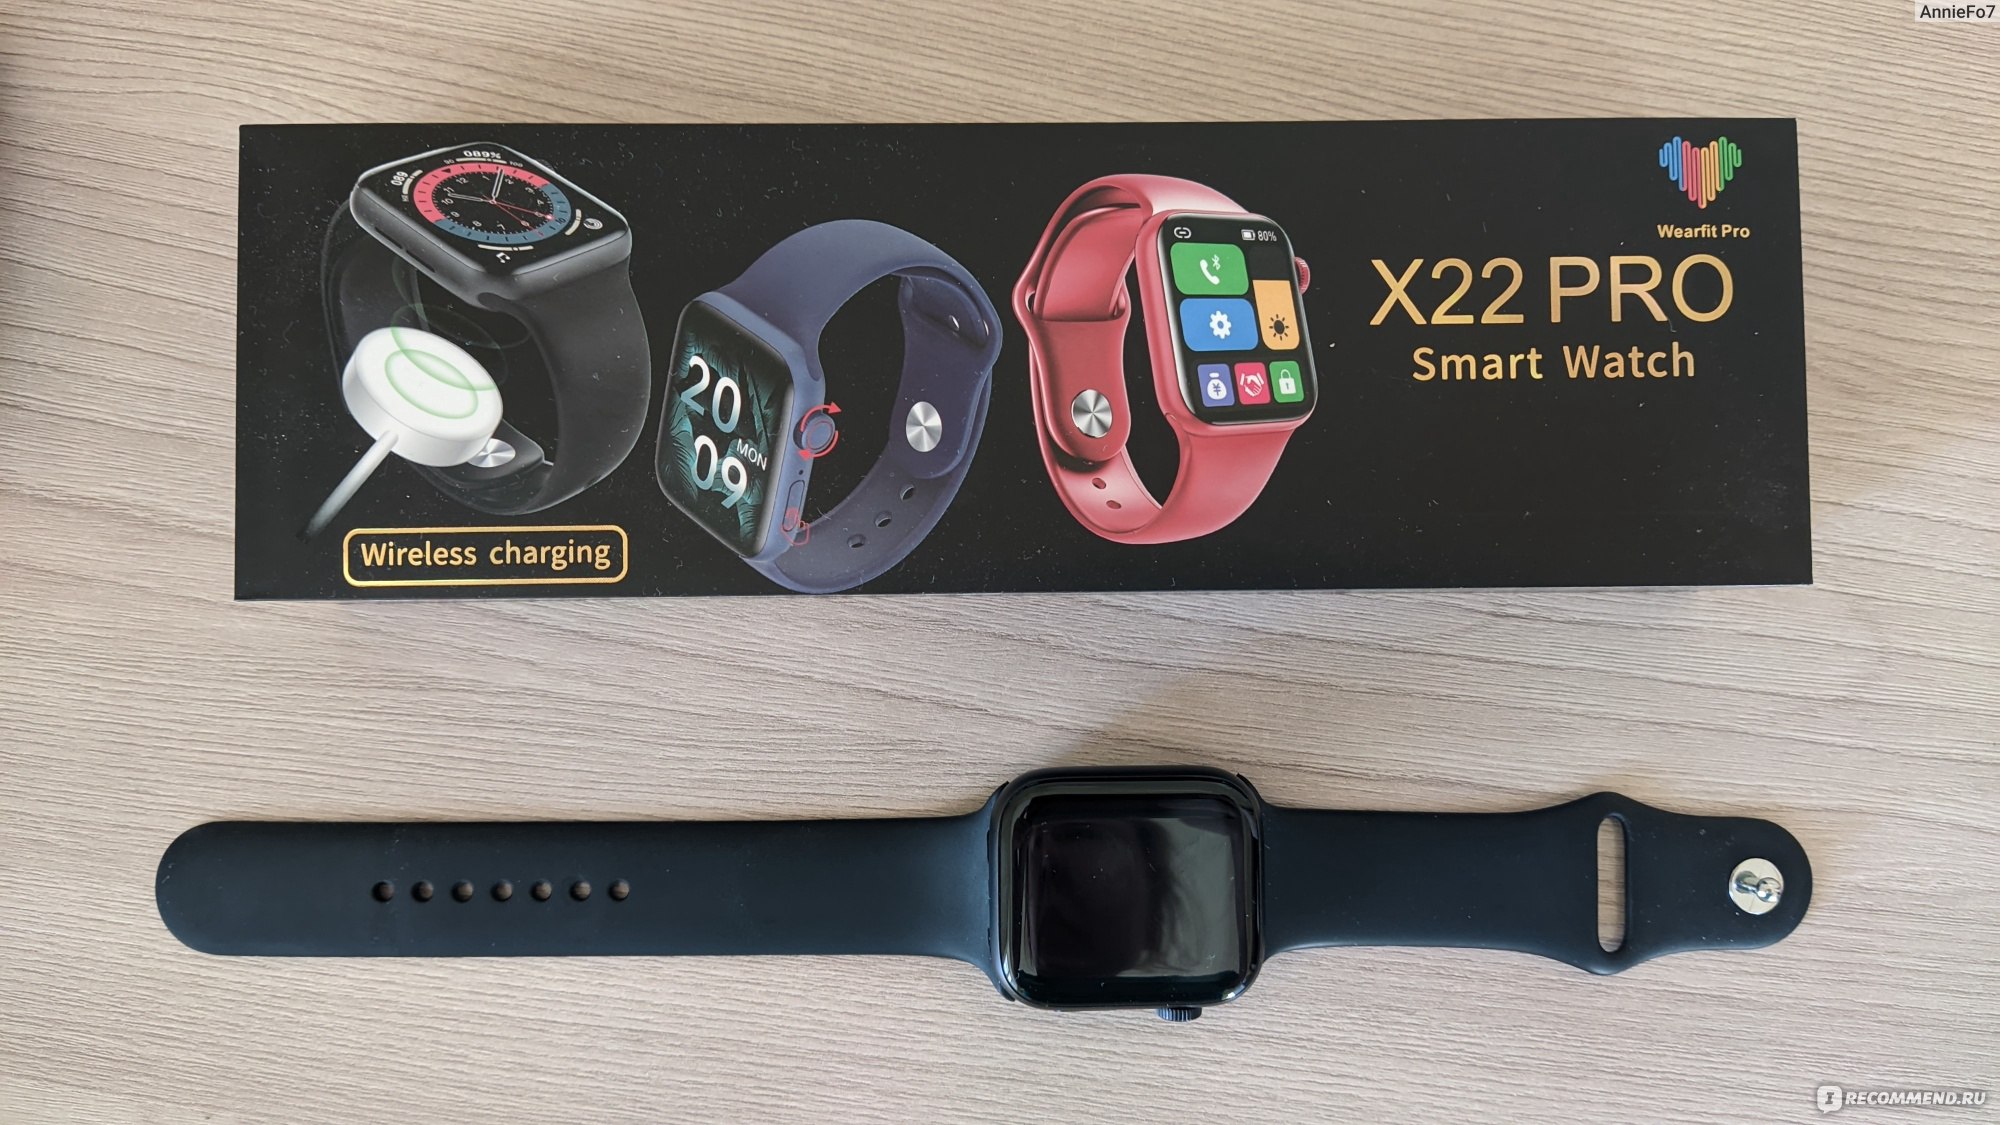 Часы 7 x pro. Смарт часы x22 Pro. Смарт часы Wearfit Pro x22. Smart watch x22 Pro Max. Часы x22 Pro NFC.